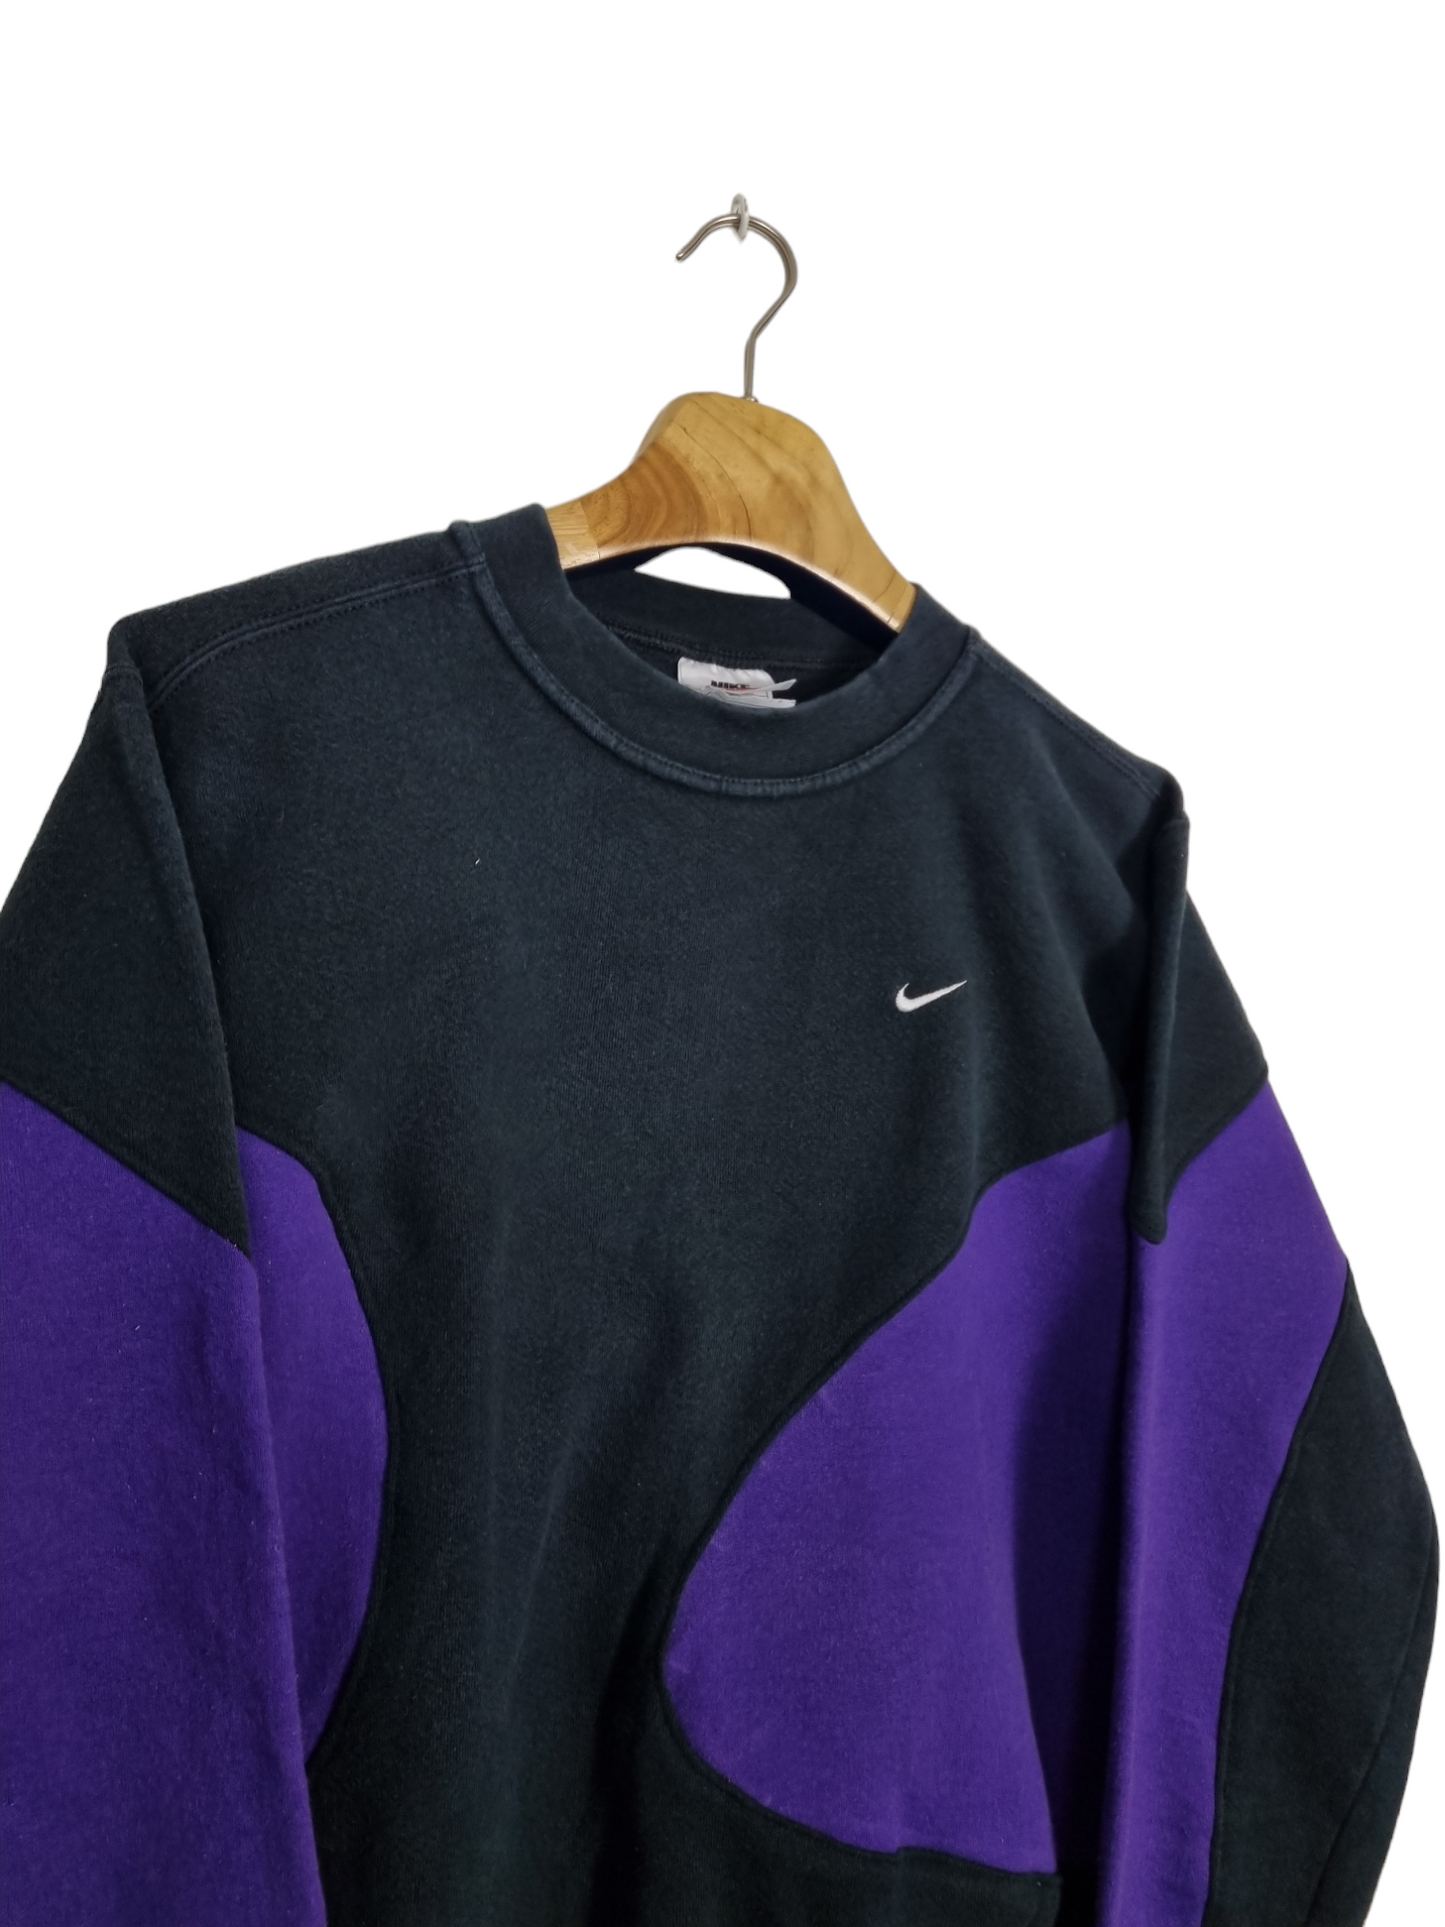 Nike chest swoosh sweater maat S